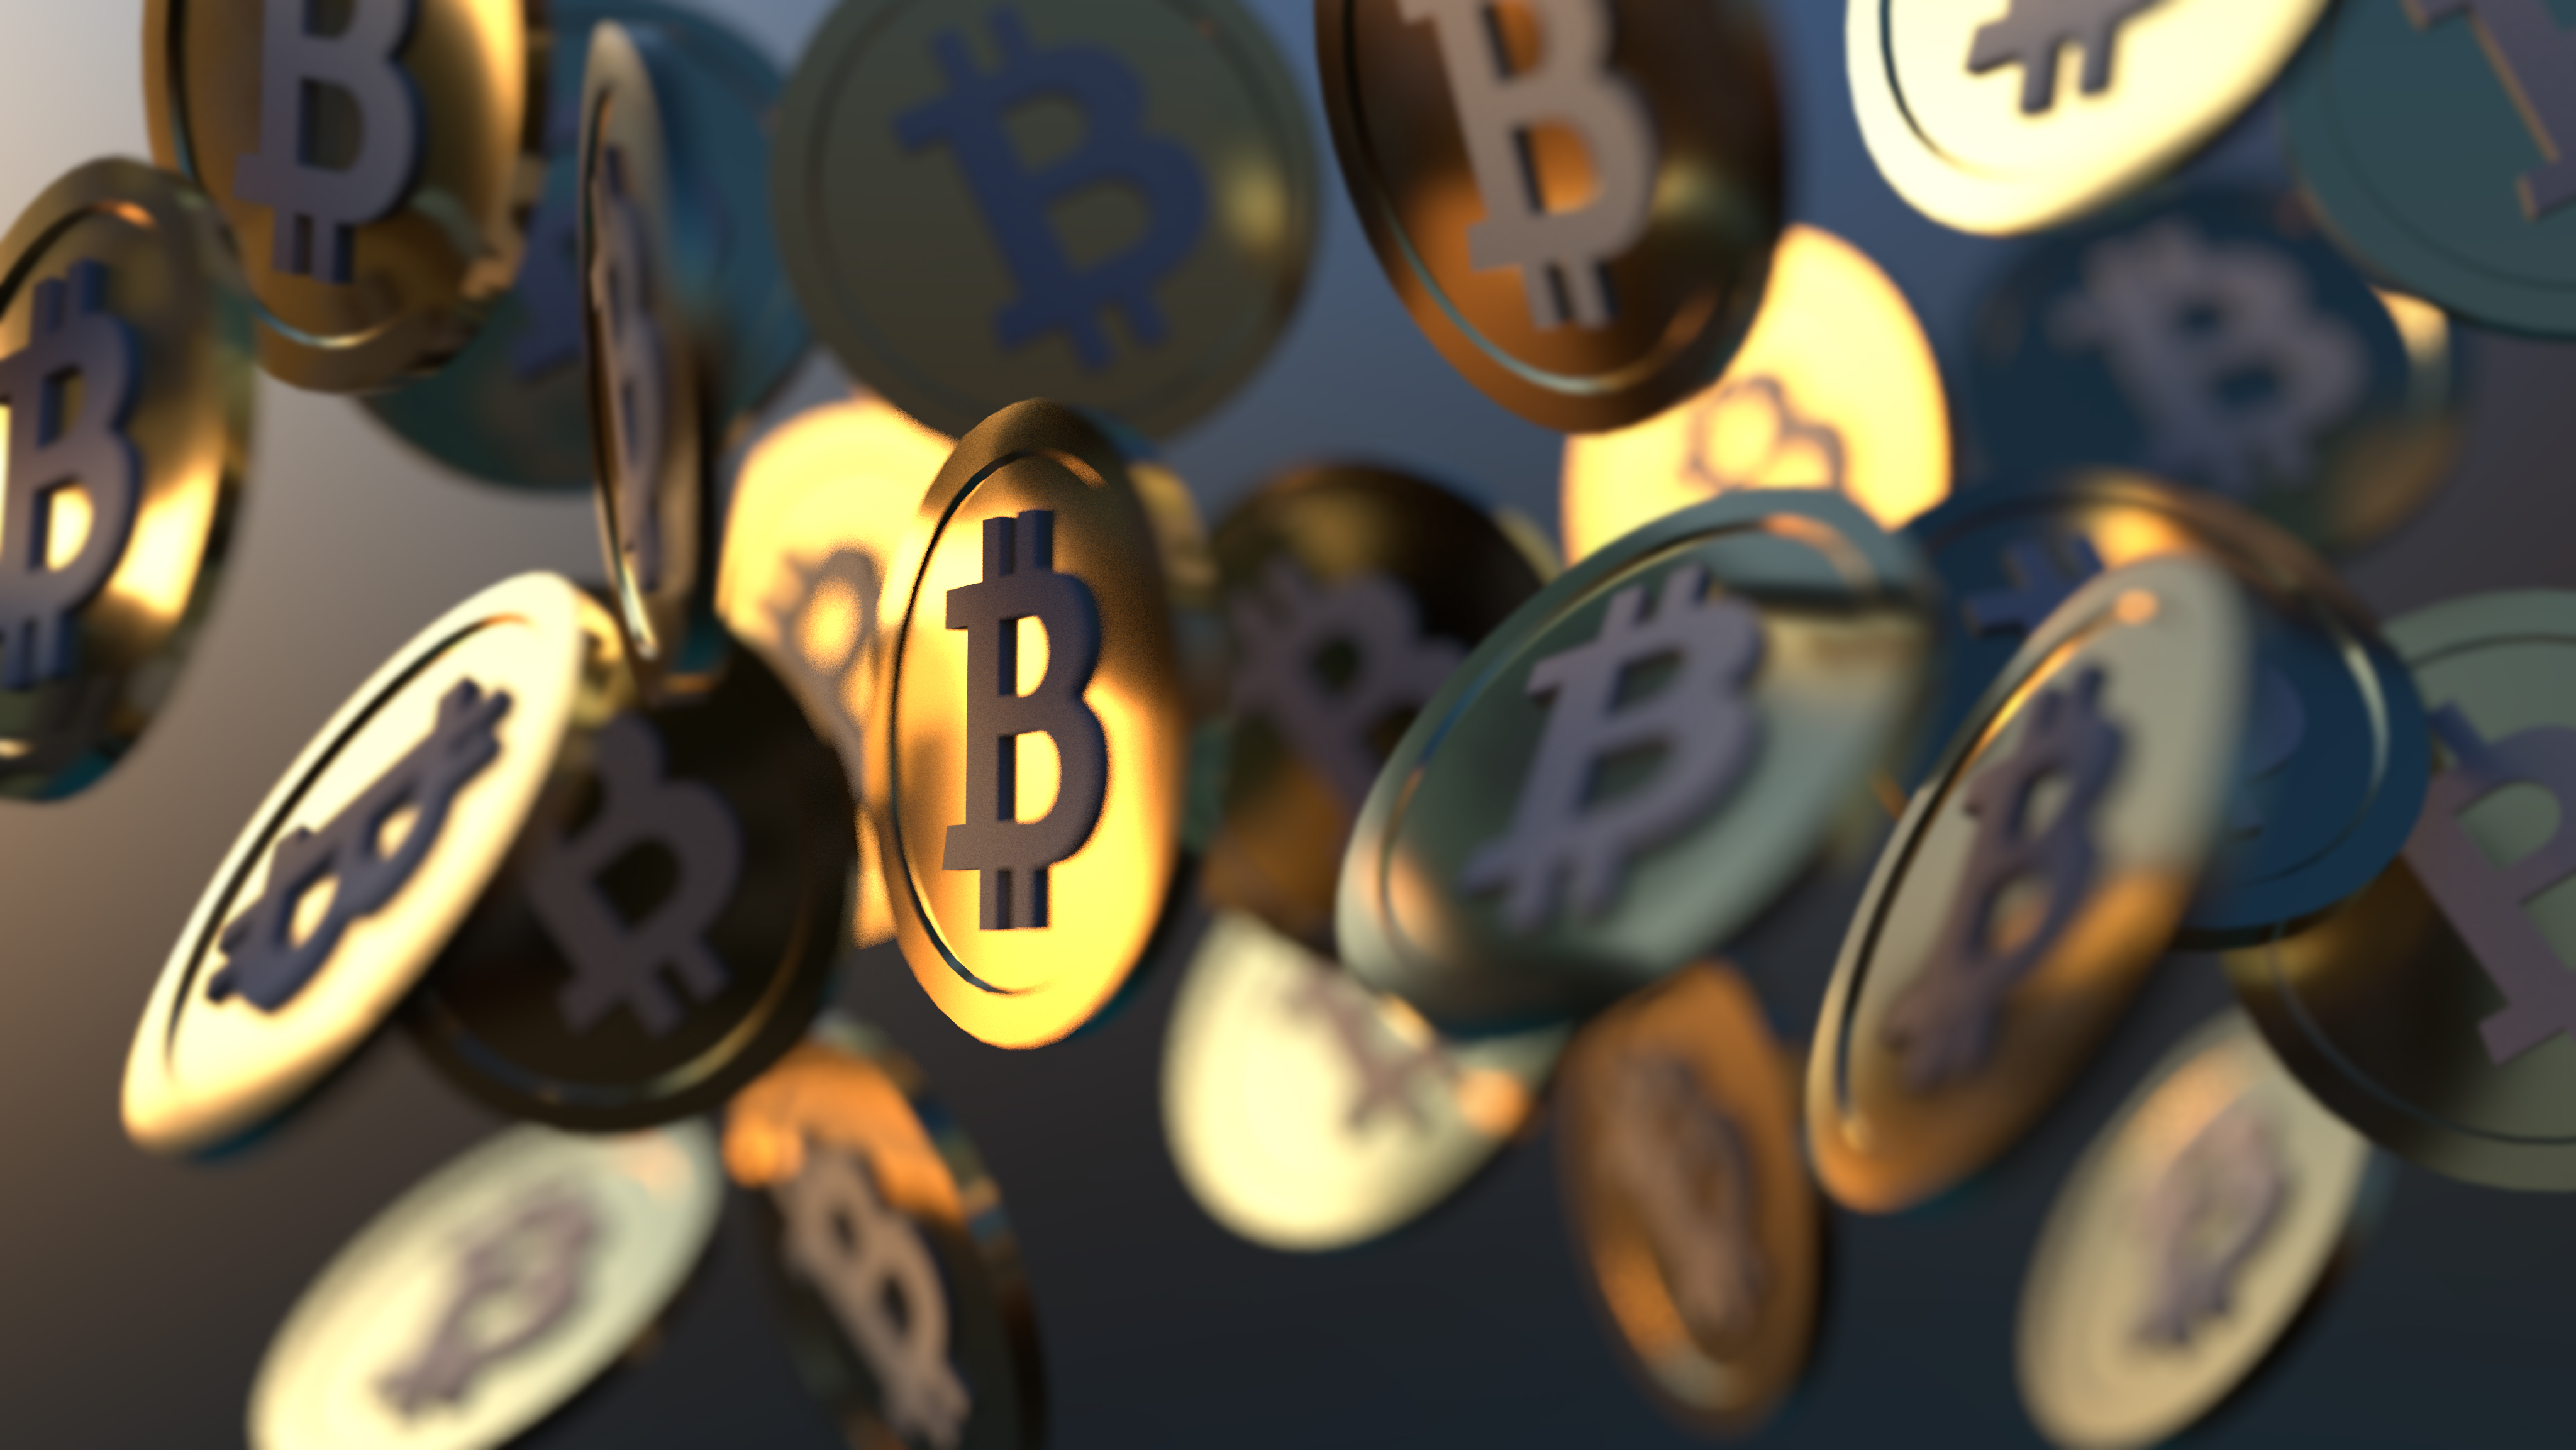 1 billion in bitcoin seized